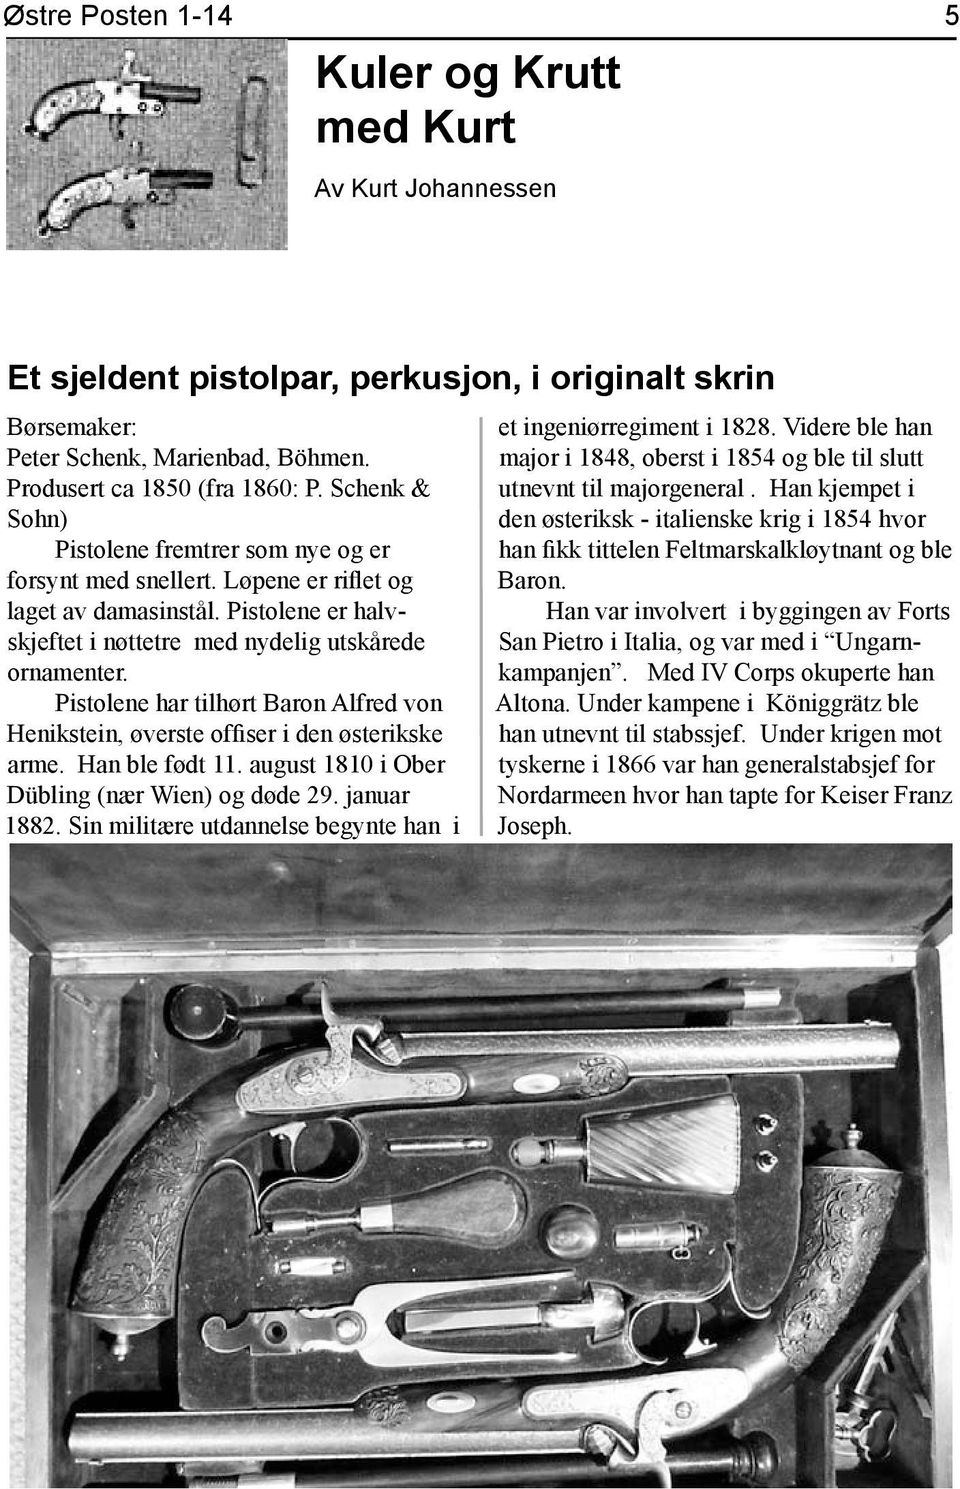 Pistolene har tilhørt Baron Alfred von Henikstein, øverste offiser i den østerikske arme. Han ble født 11. august 1810 i Ober Dübling (nær Wien) og døde 29. januar 1882.